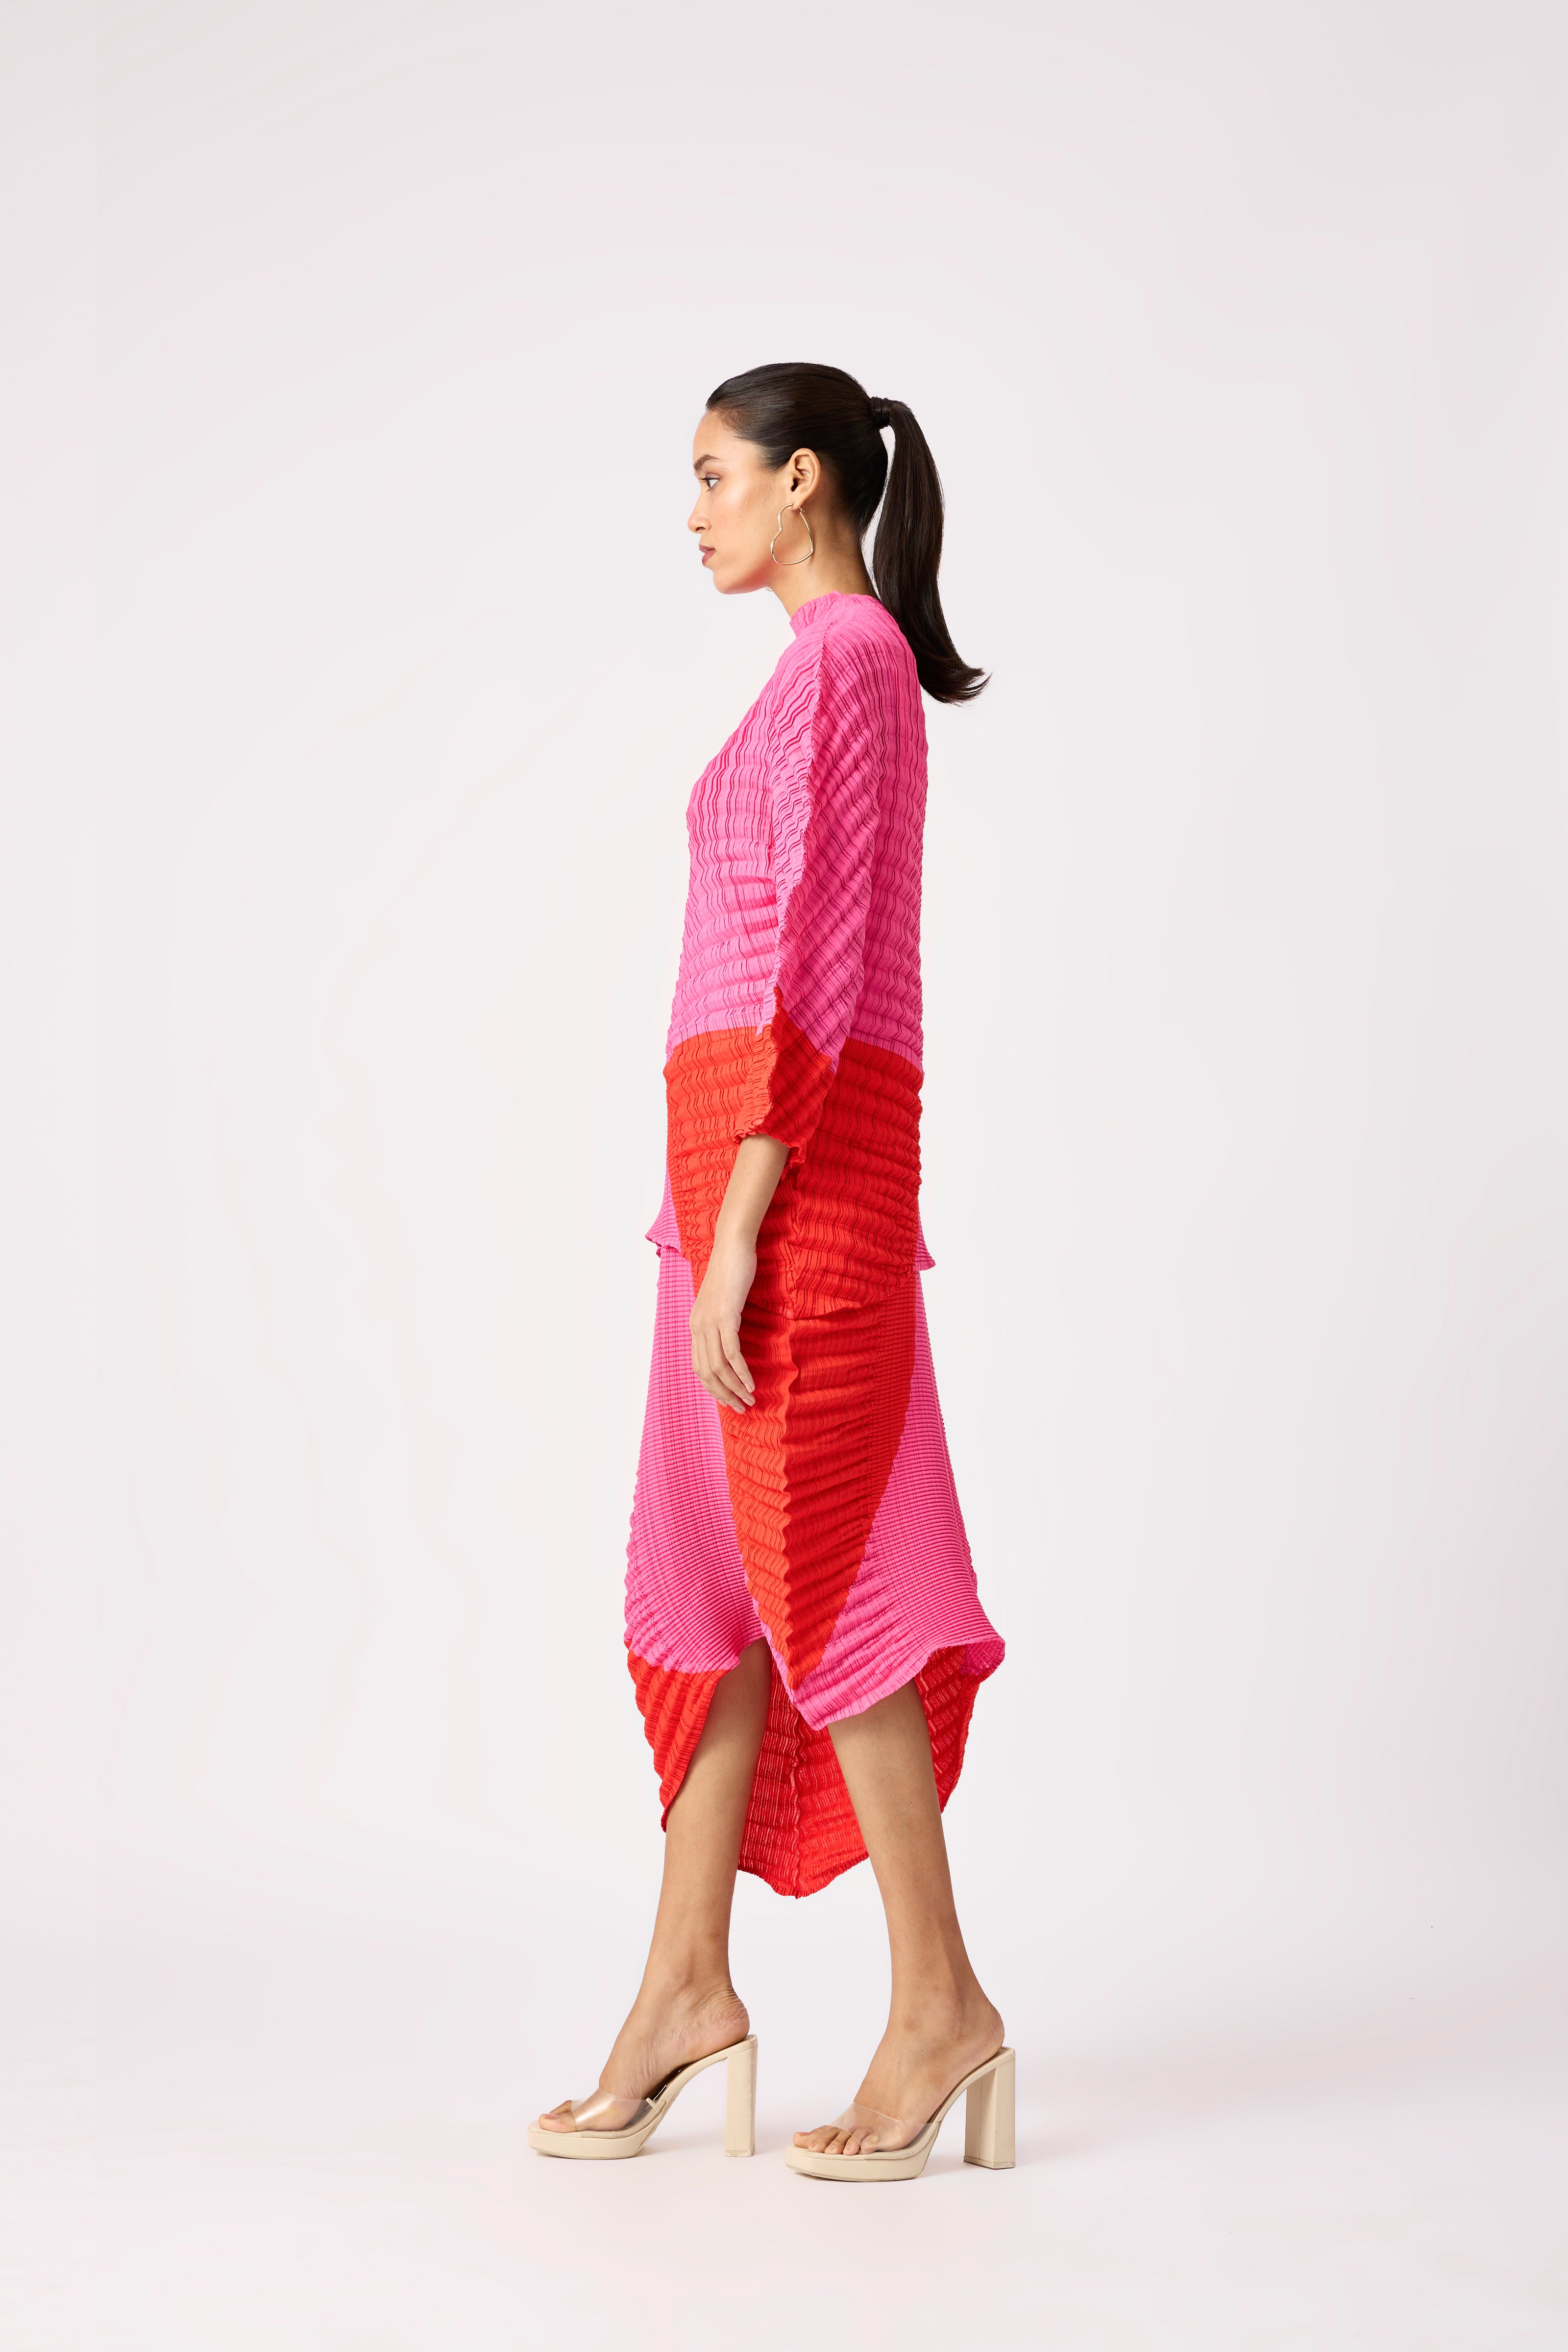 Aspen Skirt Set - Red & Pink